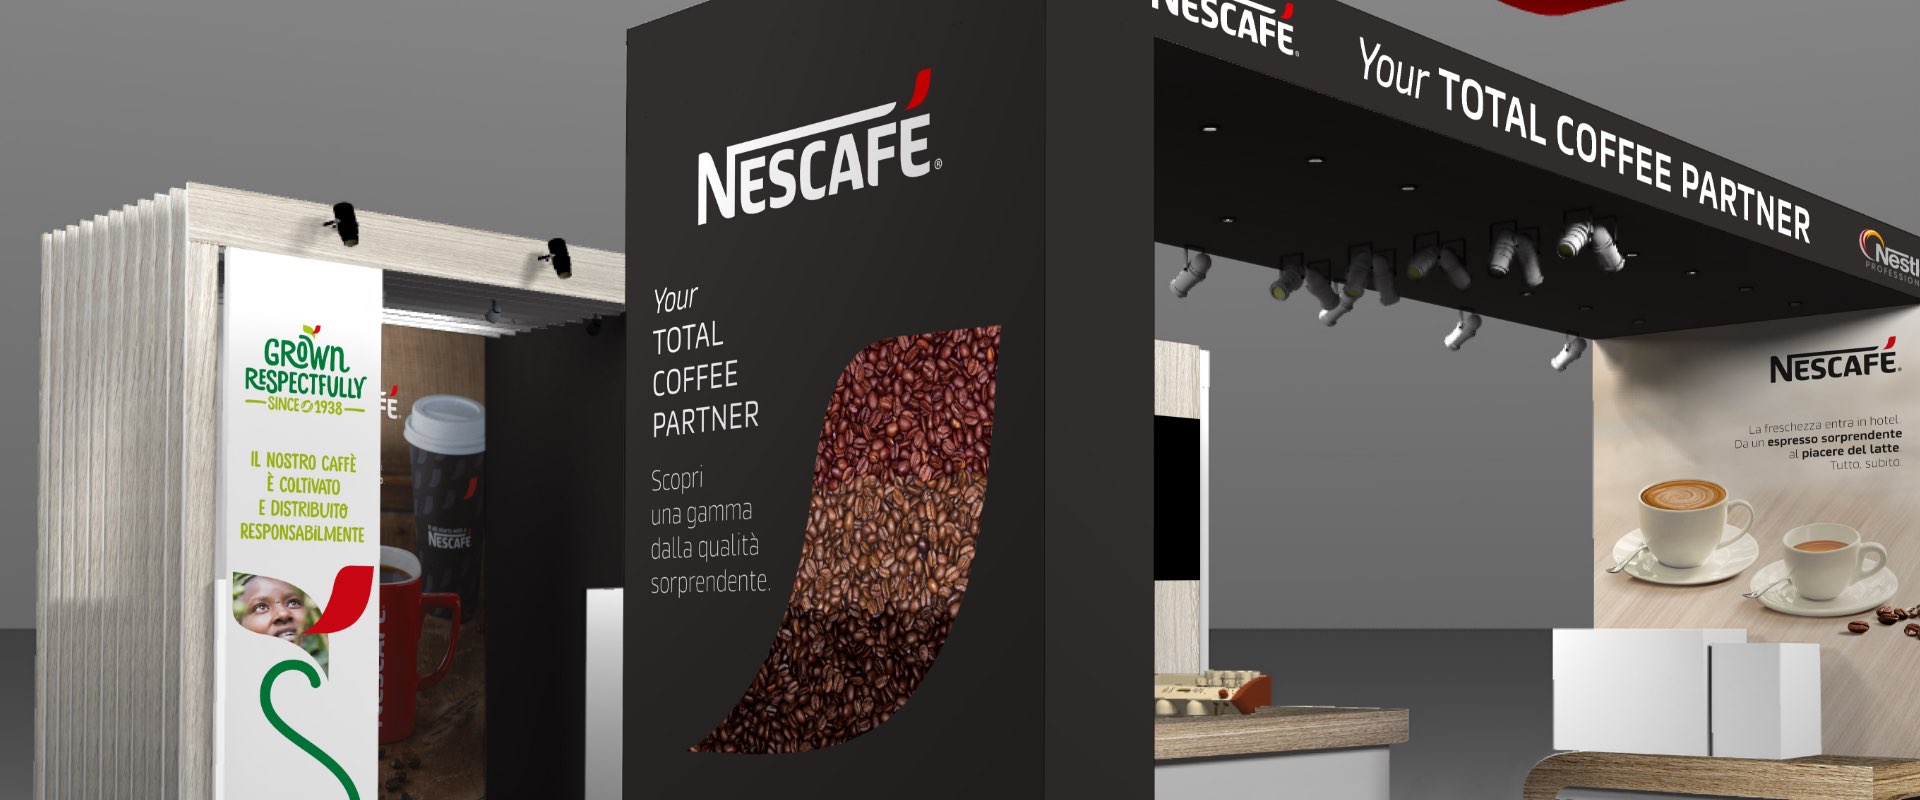 events and exhibitions fiera SIGEP allestimento stand Nescafé Nestlé professional